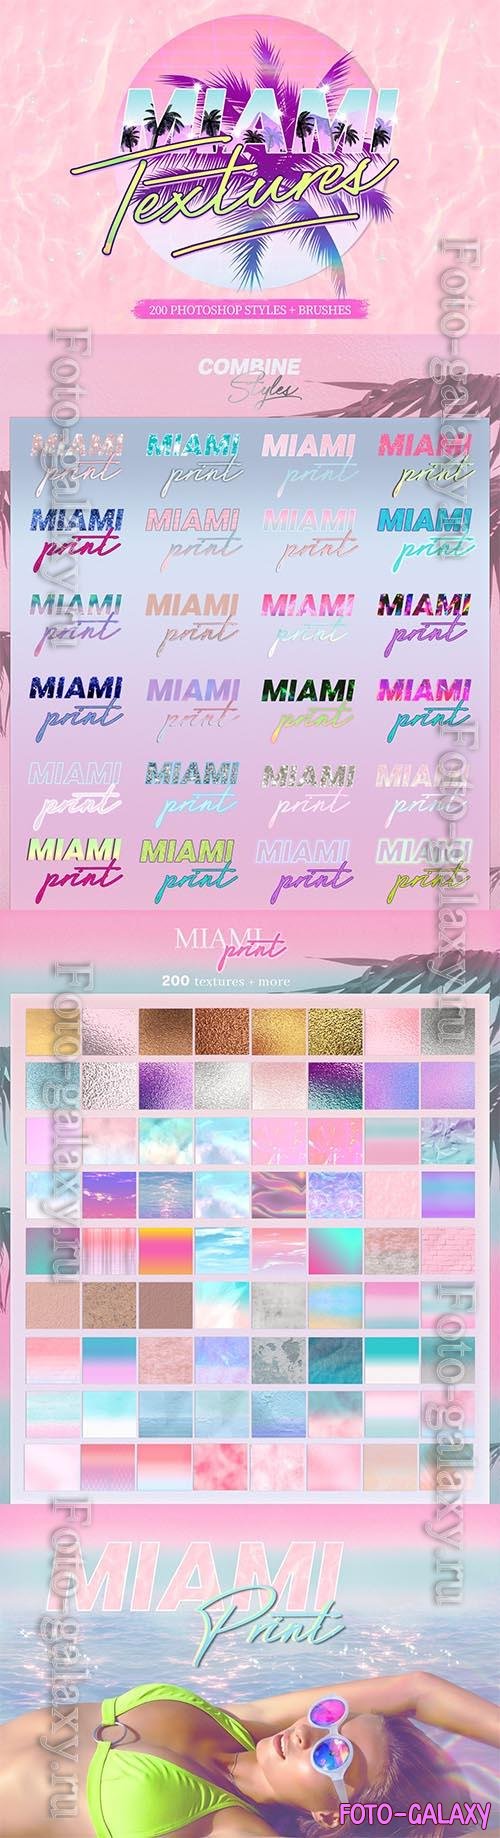 Miami Print Aesthetic PS Styles